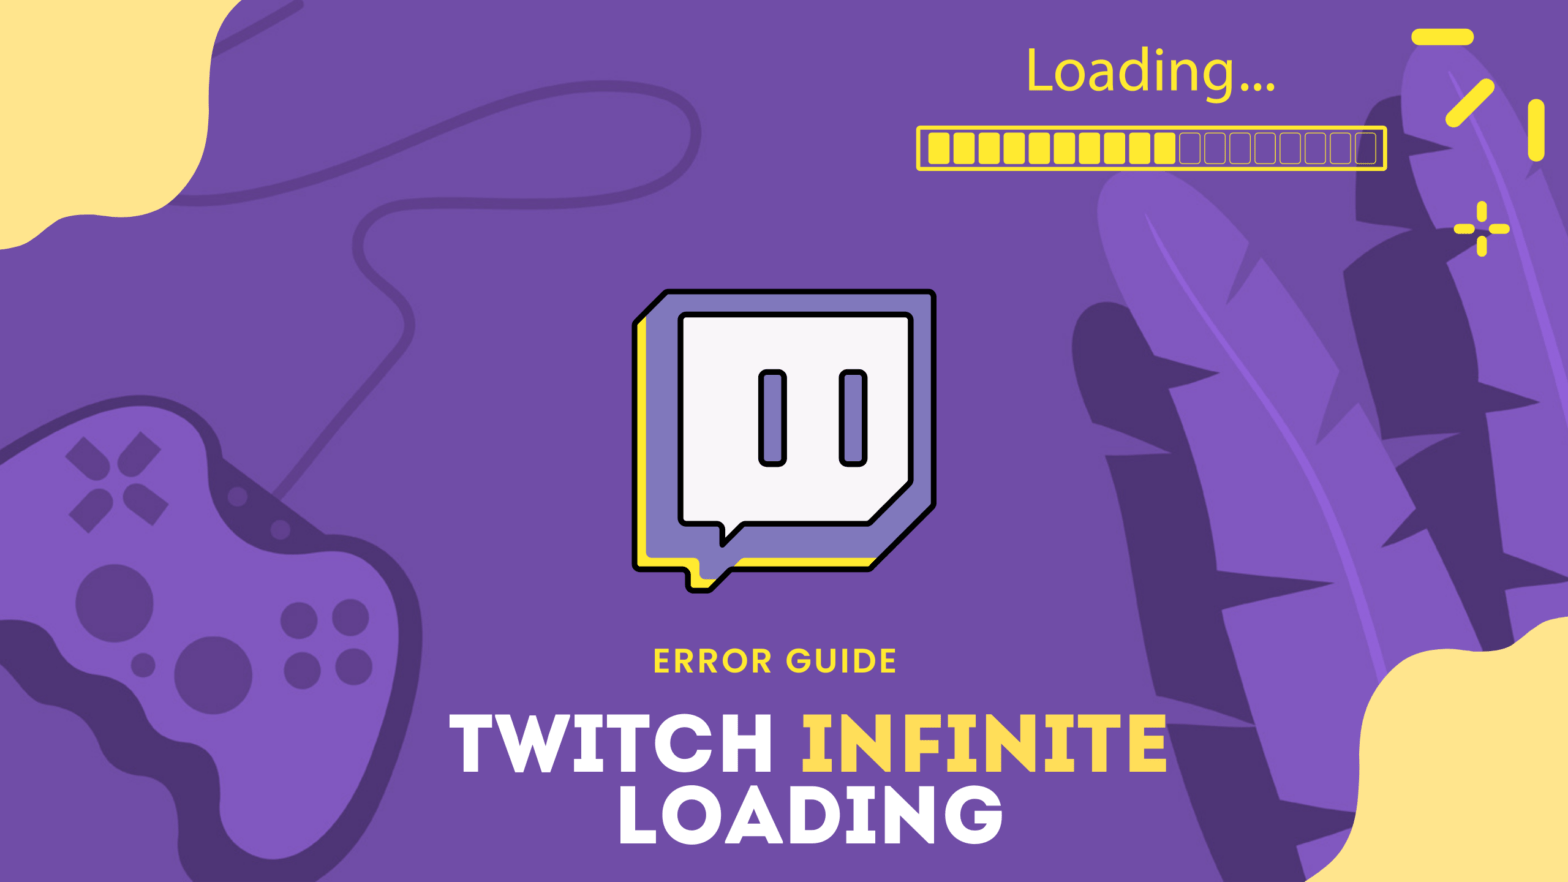 Twitch infinite loading